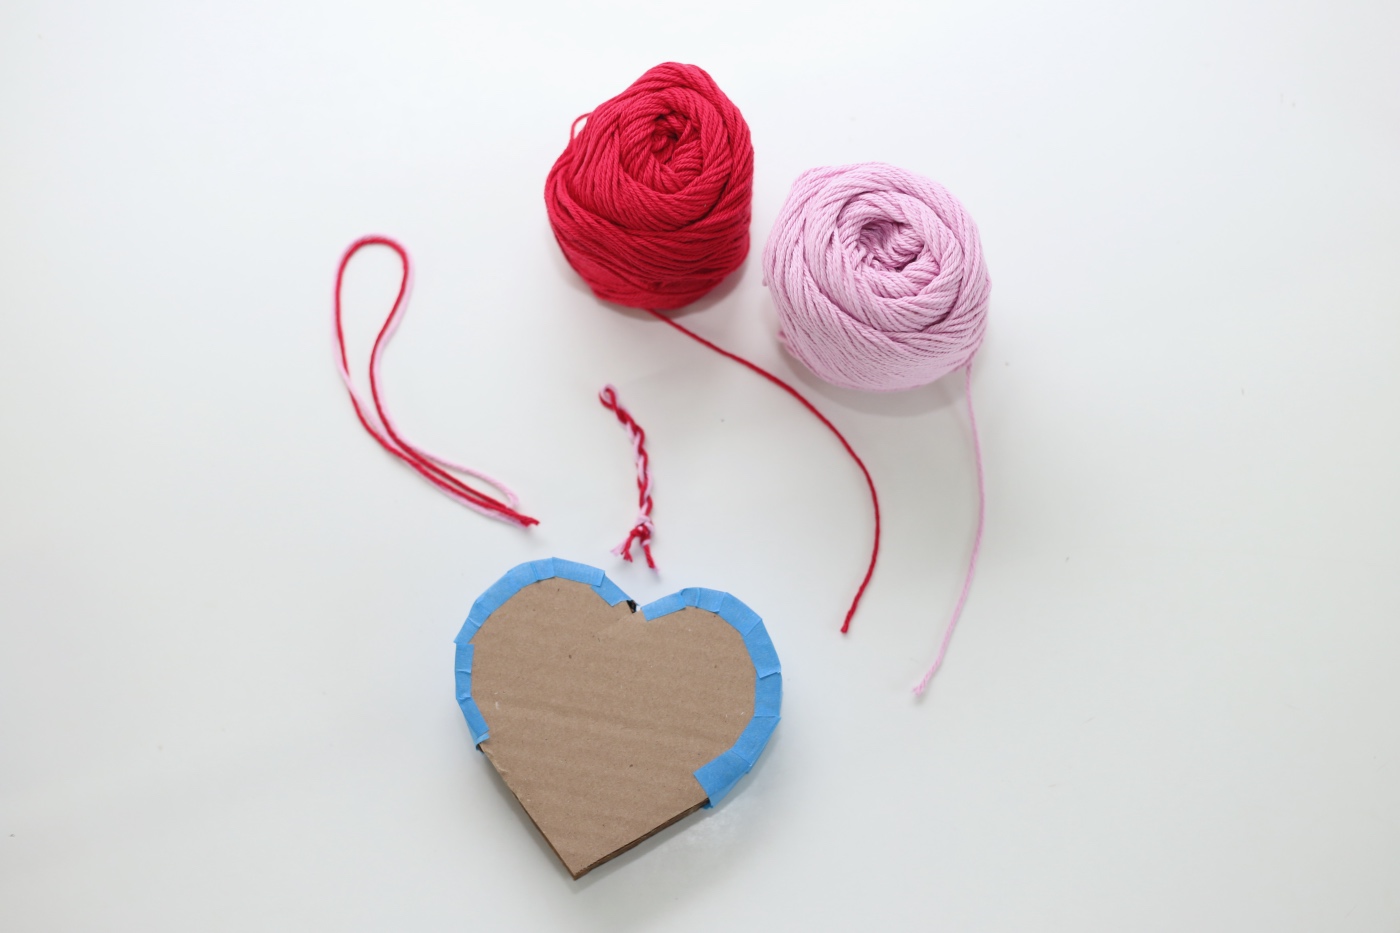 add a twist of yarn to the top mini heart pinata diy